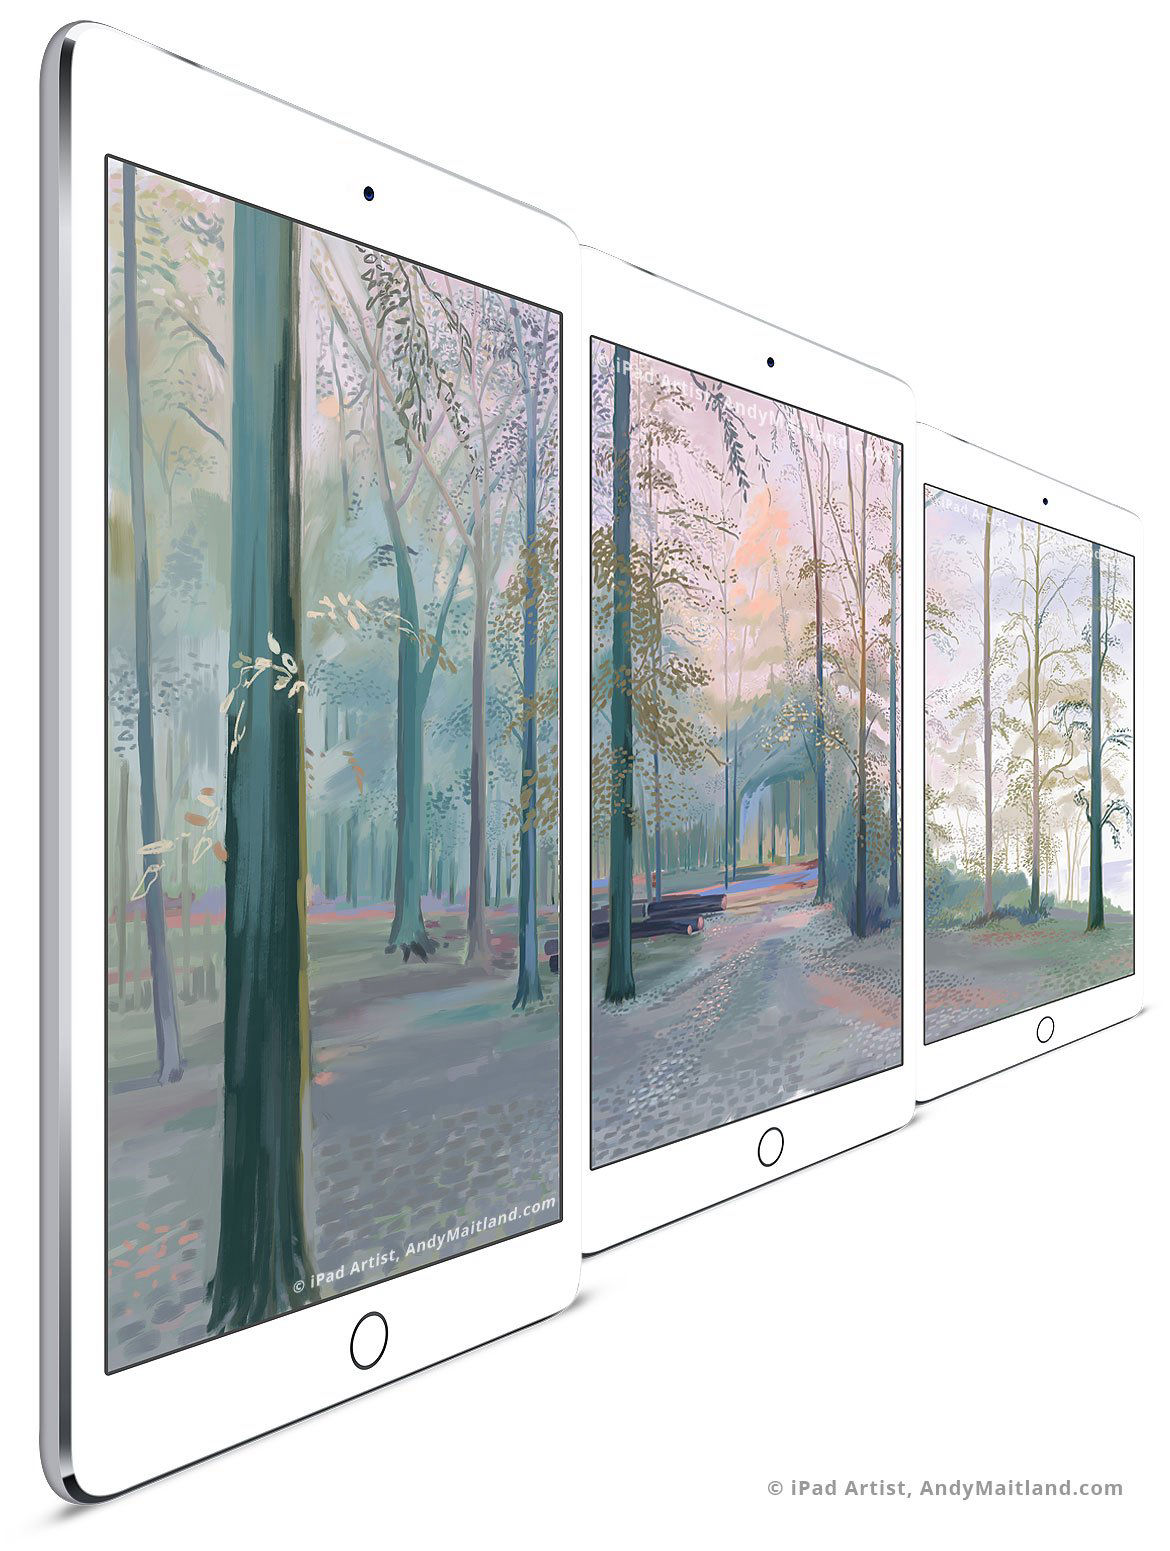 Andy Maitland, 2015, Morning Mist, iPad Drawing drawn across three iPad Canvases.